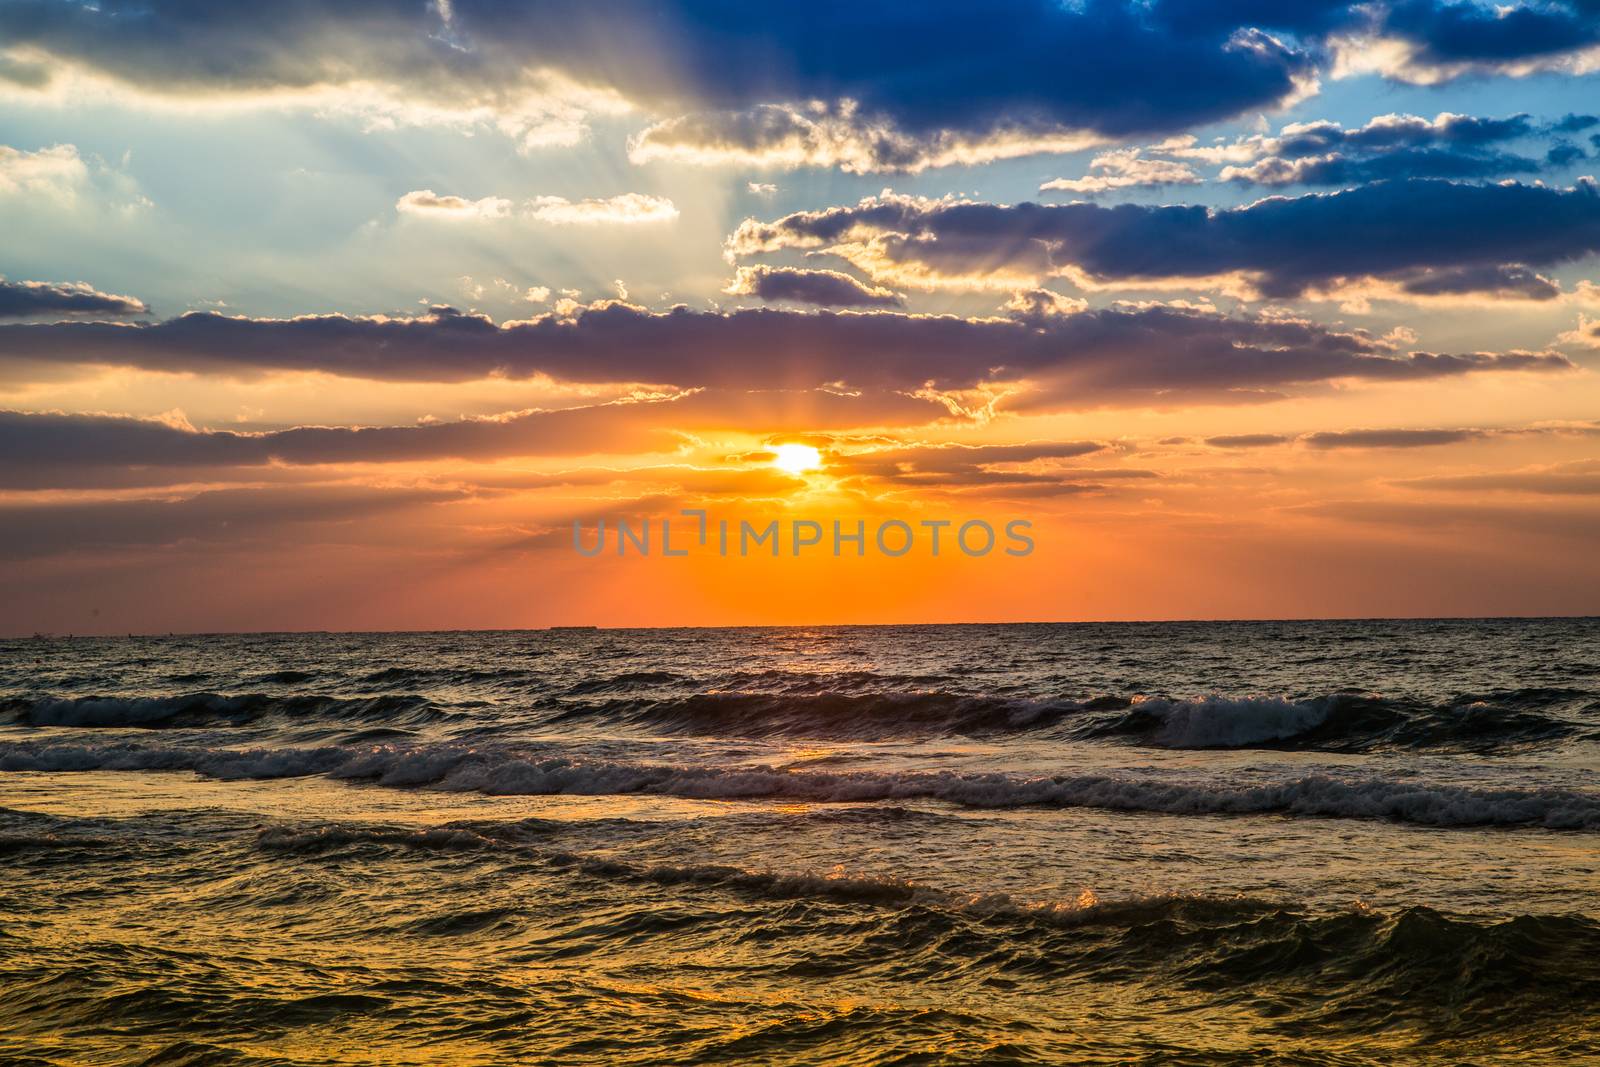 Beautiful sunset at the beach, amazing colors, light beam shining through the cloudscape over the arabian gulf seascape, united arab emirates. Dubai sea and beach